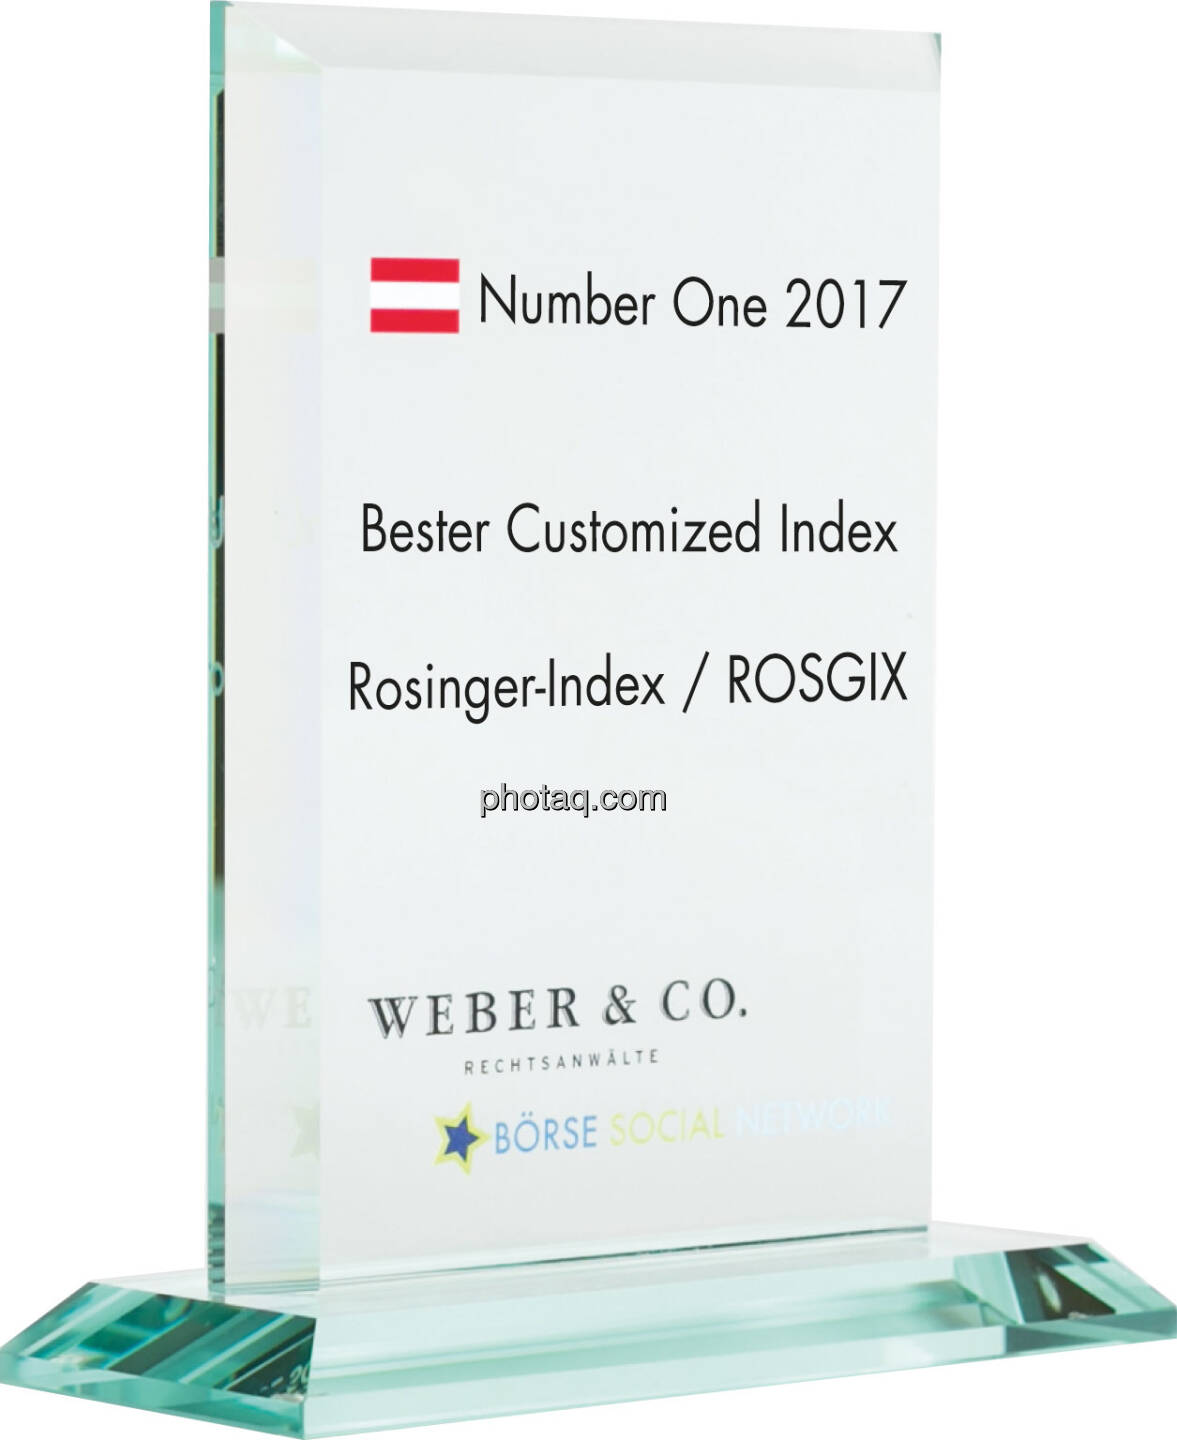 Number One Awards 2017 - Bester Customized Index - Rosinger-Index / ROSGIX